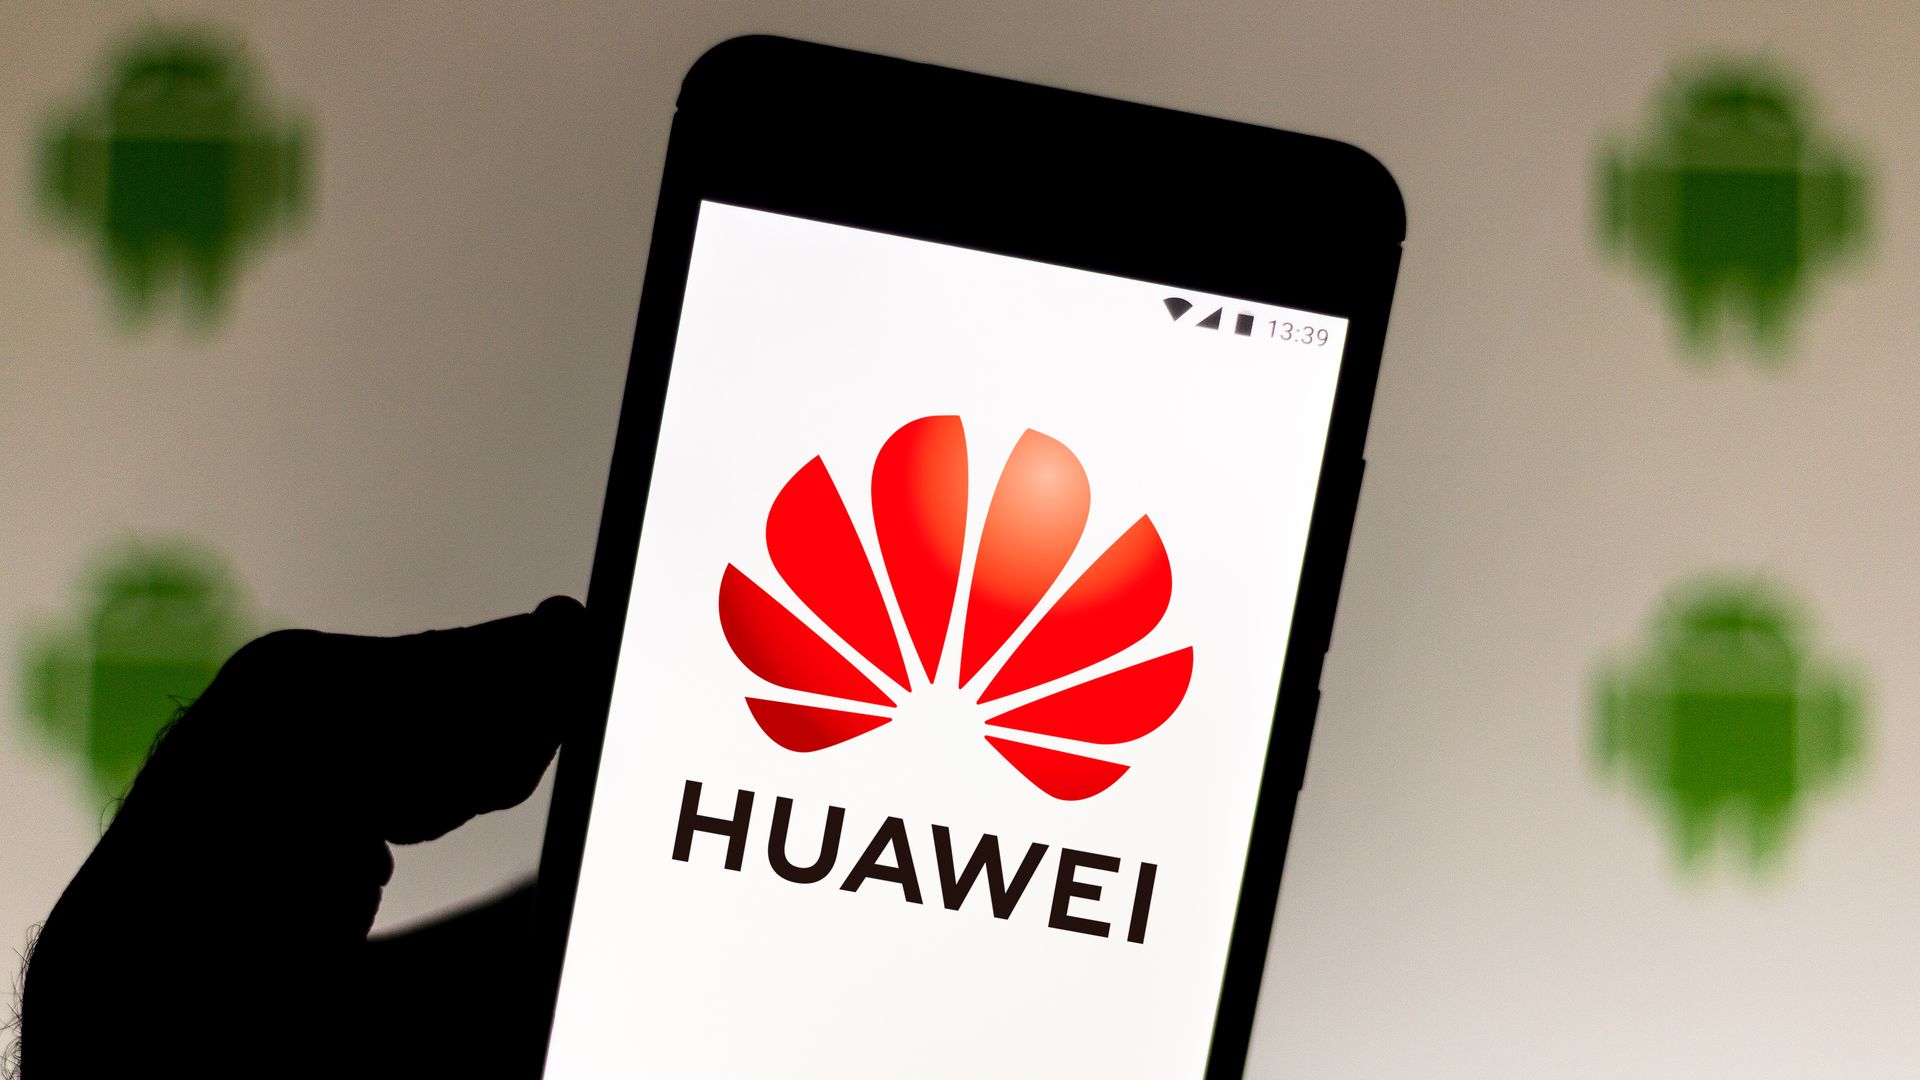 The Huawei logo on a phone.